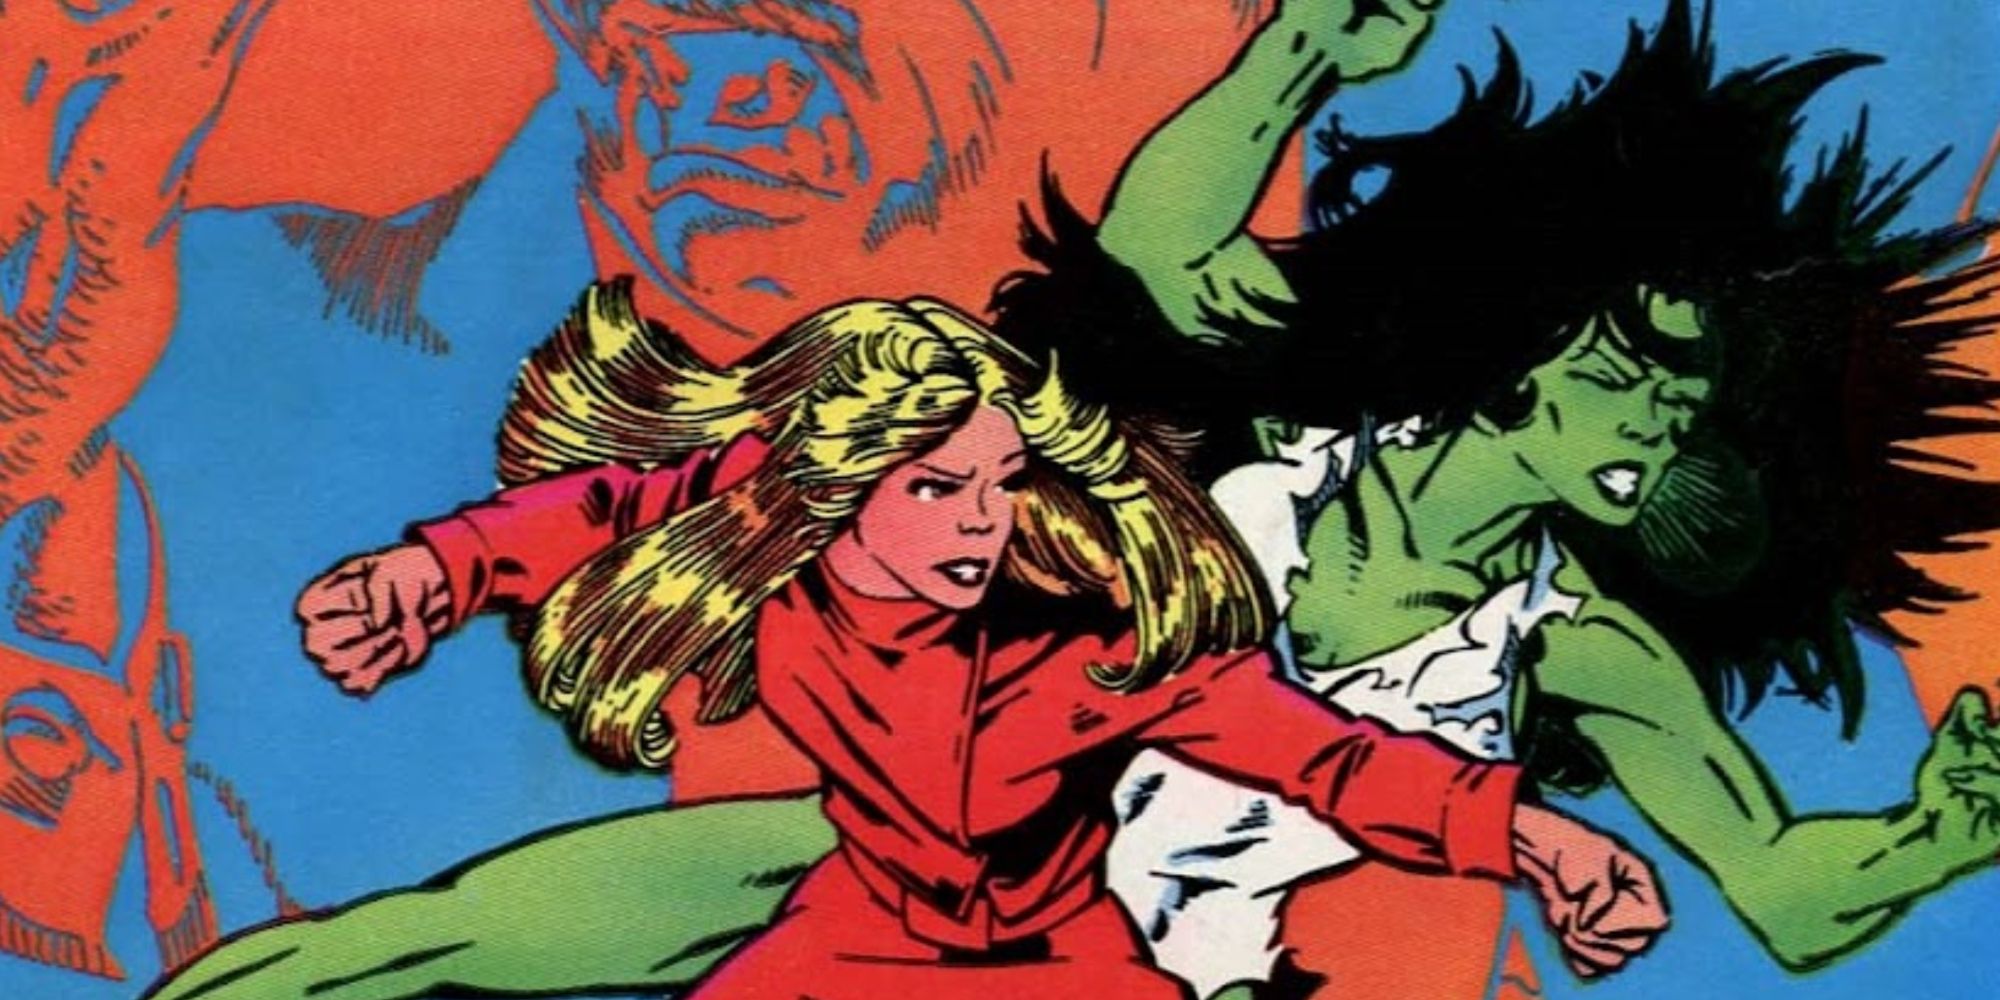 Ultima fights She-Hulk in Marvel Comics.